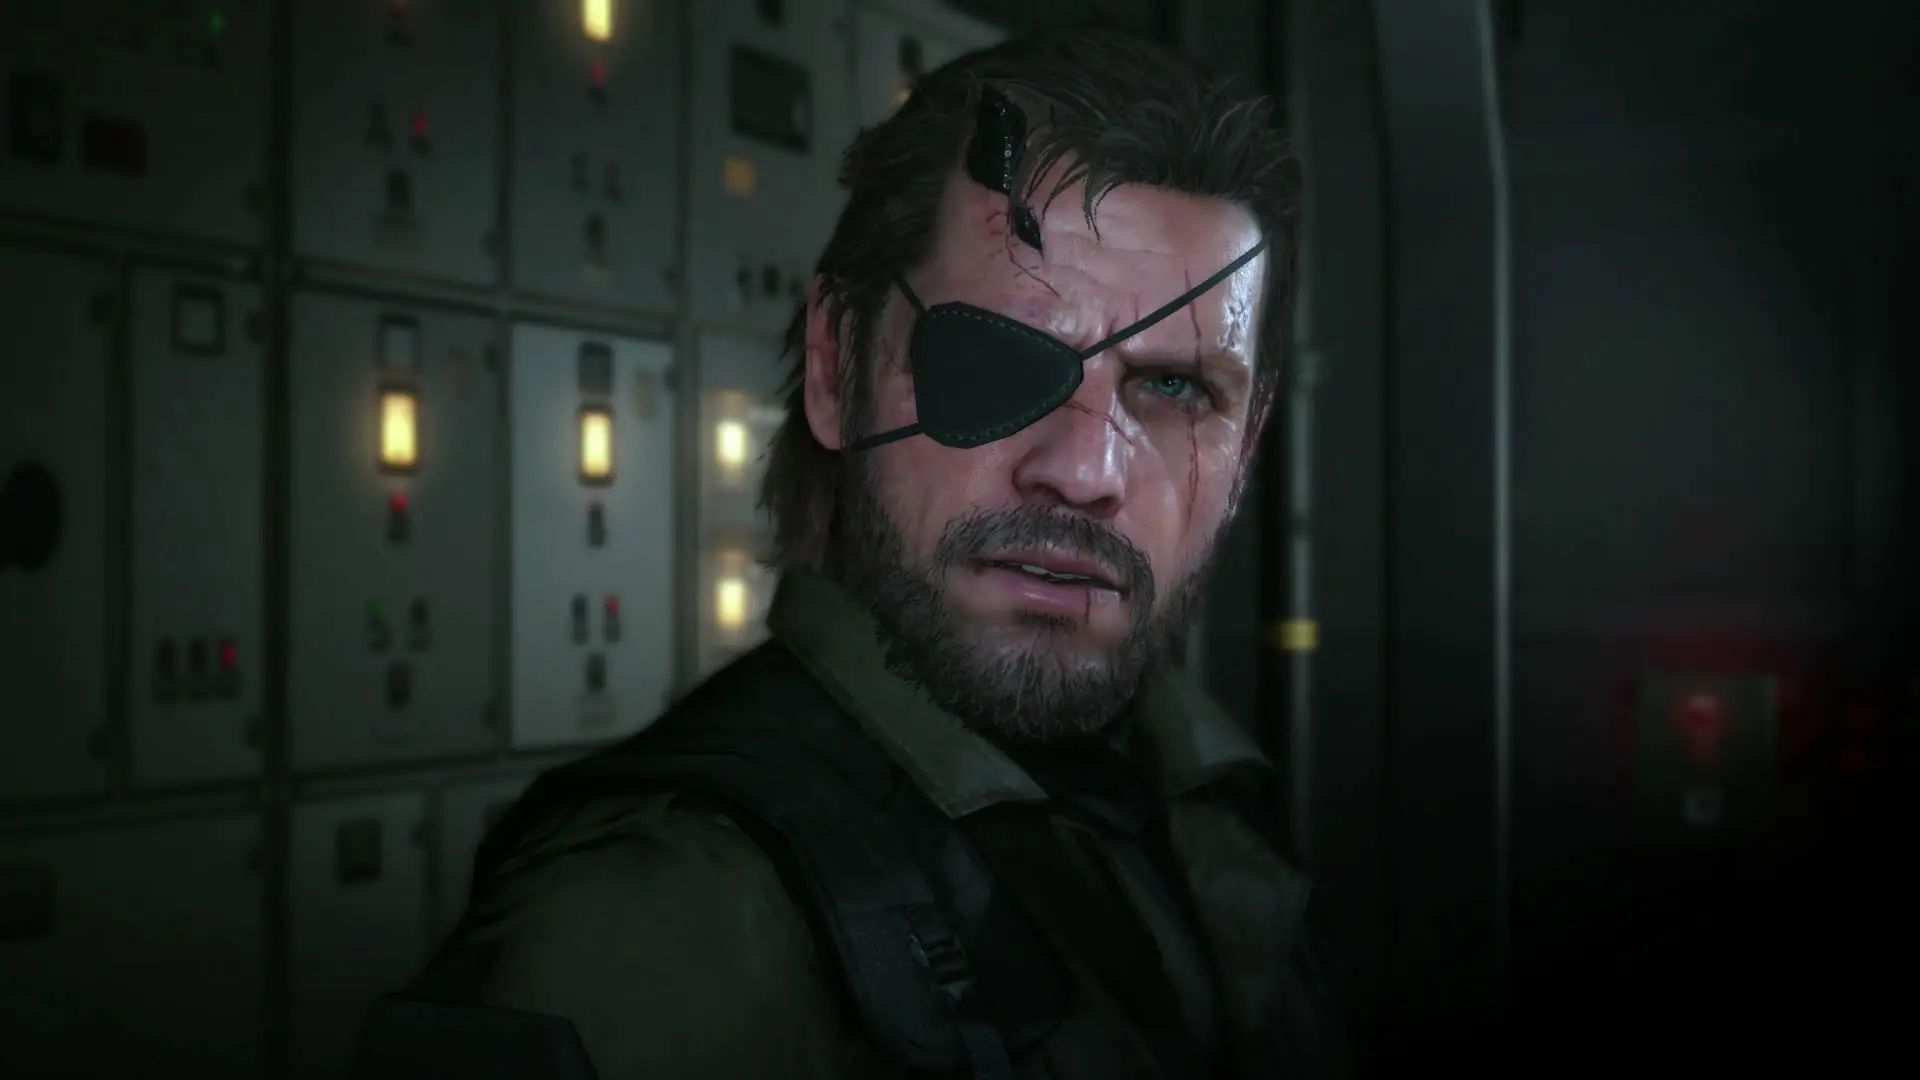 Metal-Gear-Solid-V-The-Phantom-Pain-E3-2015-Screen-Big-Boss